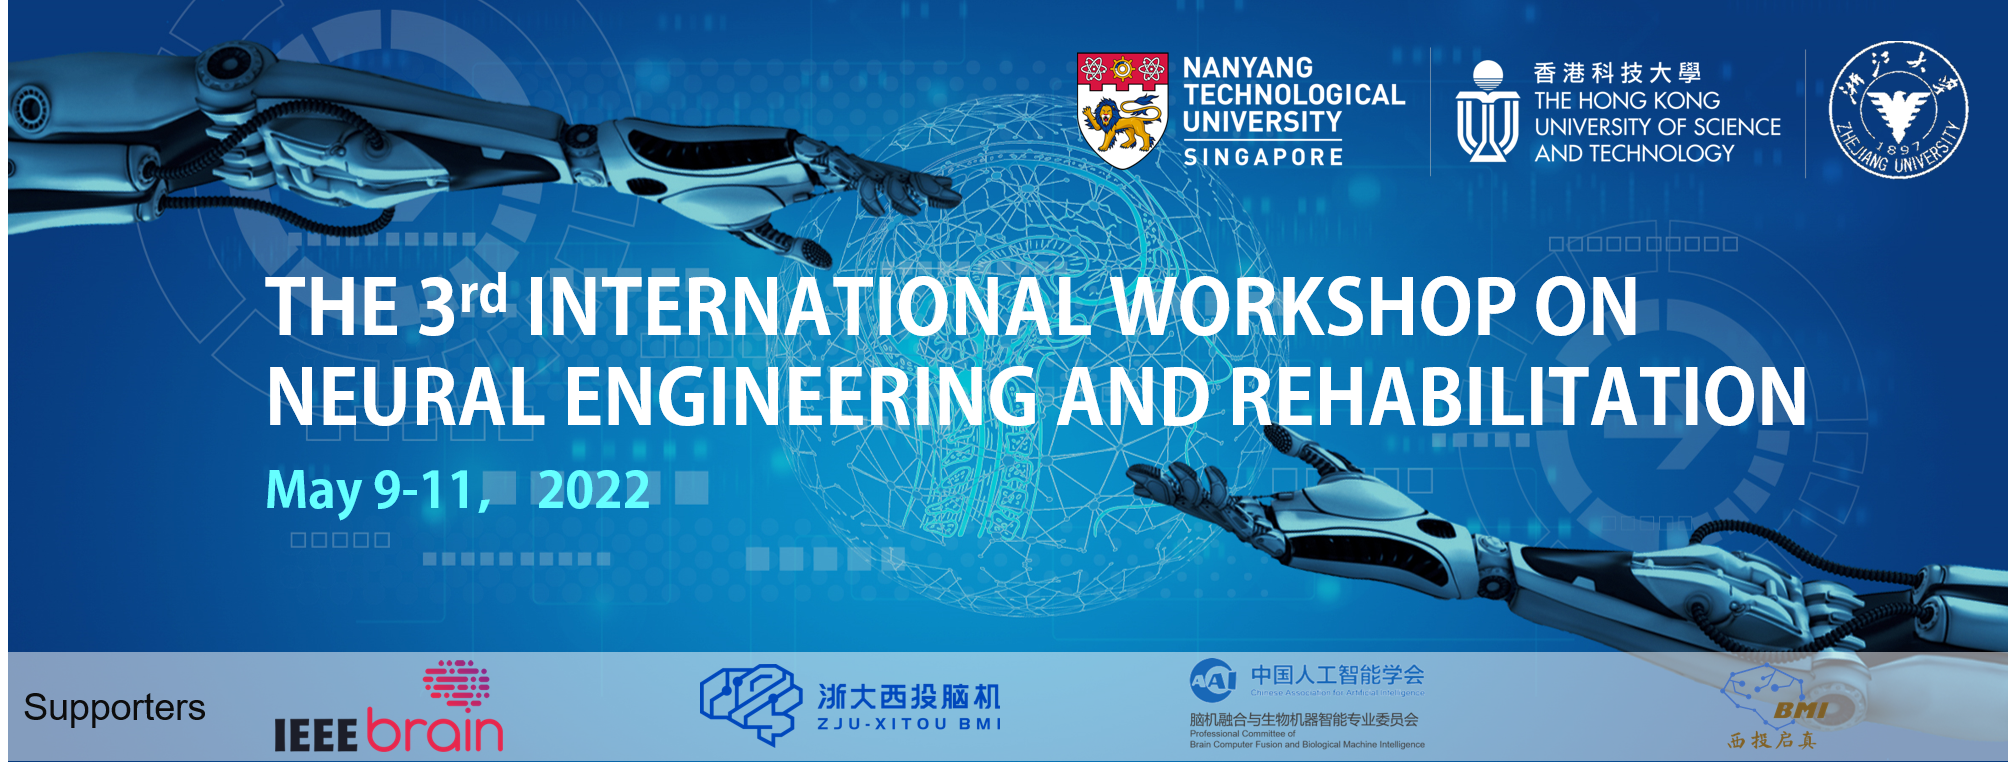 The 3rd International Workshop on Neural Engineering & Rehabilitation